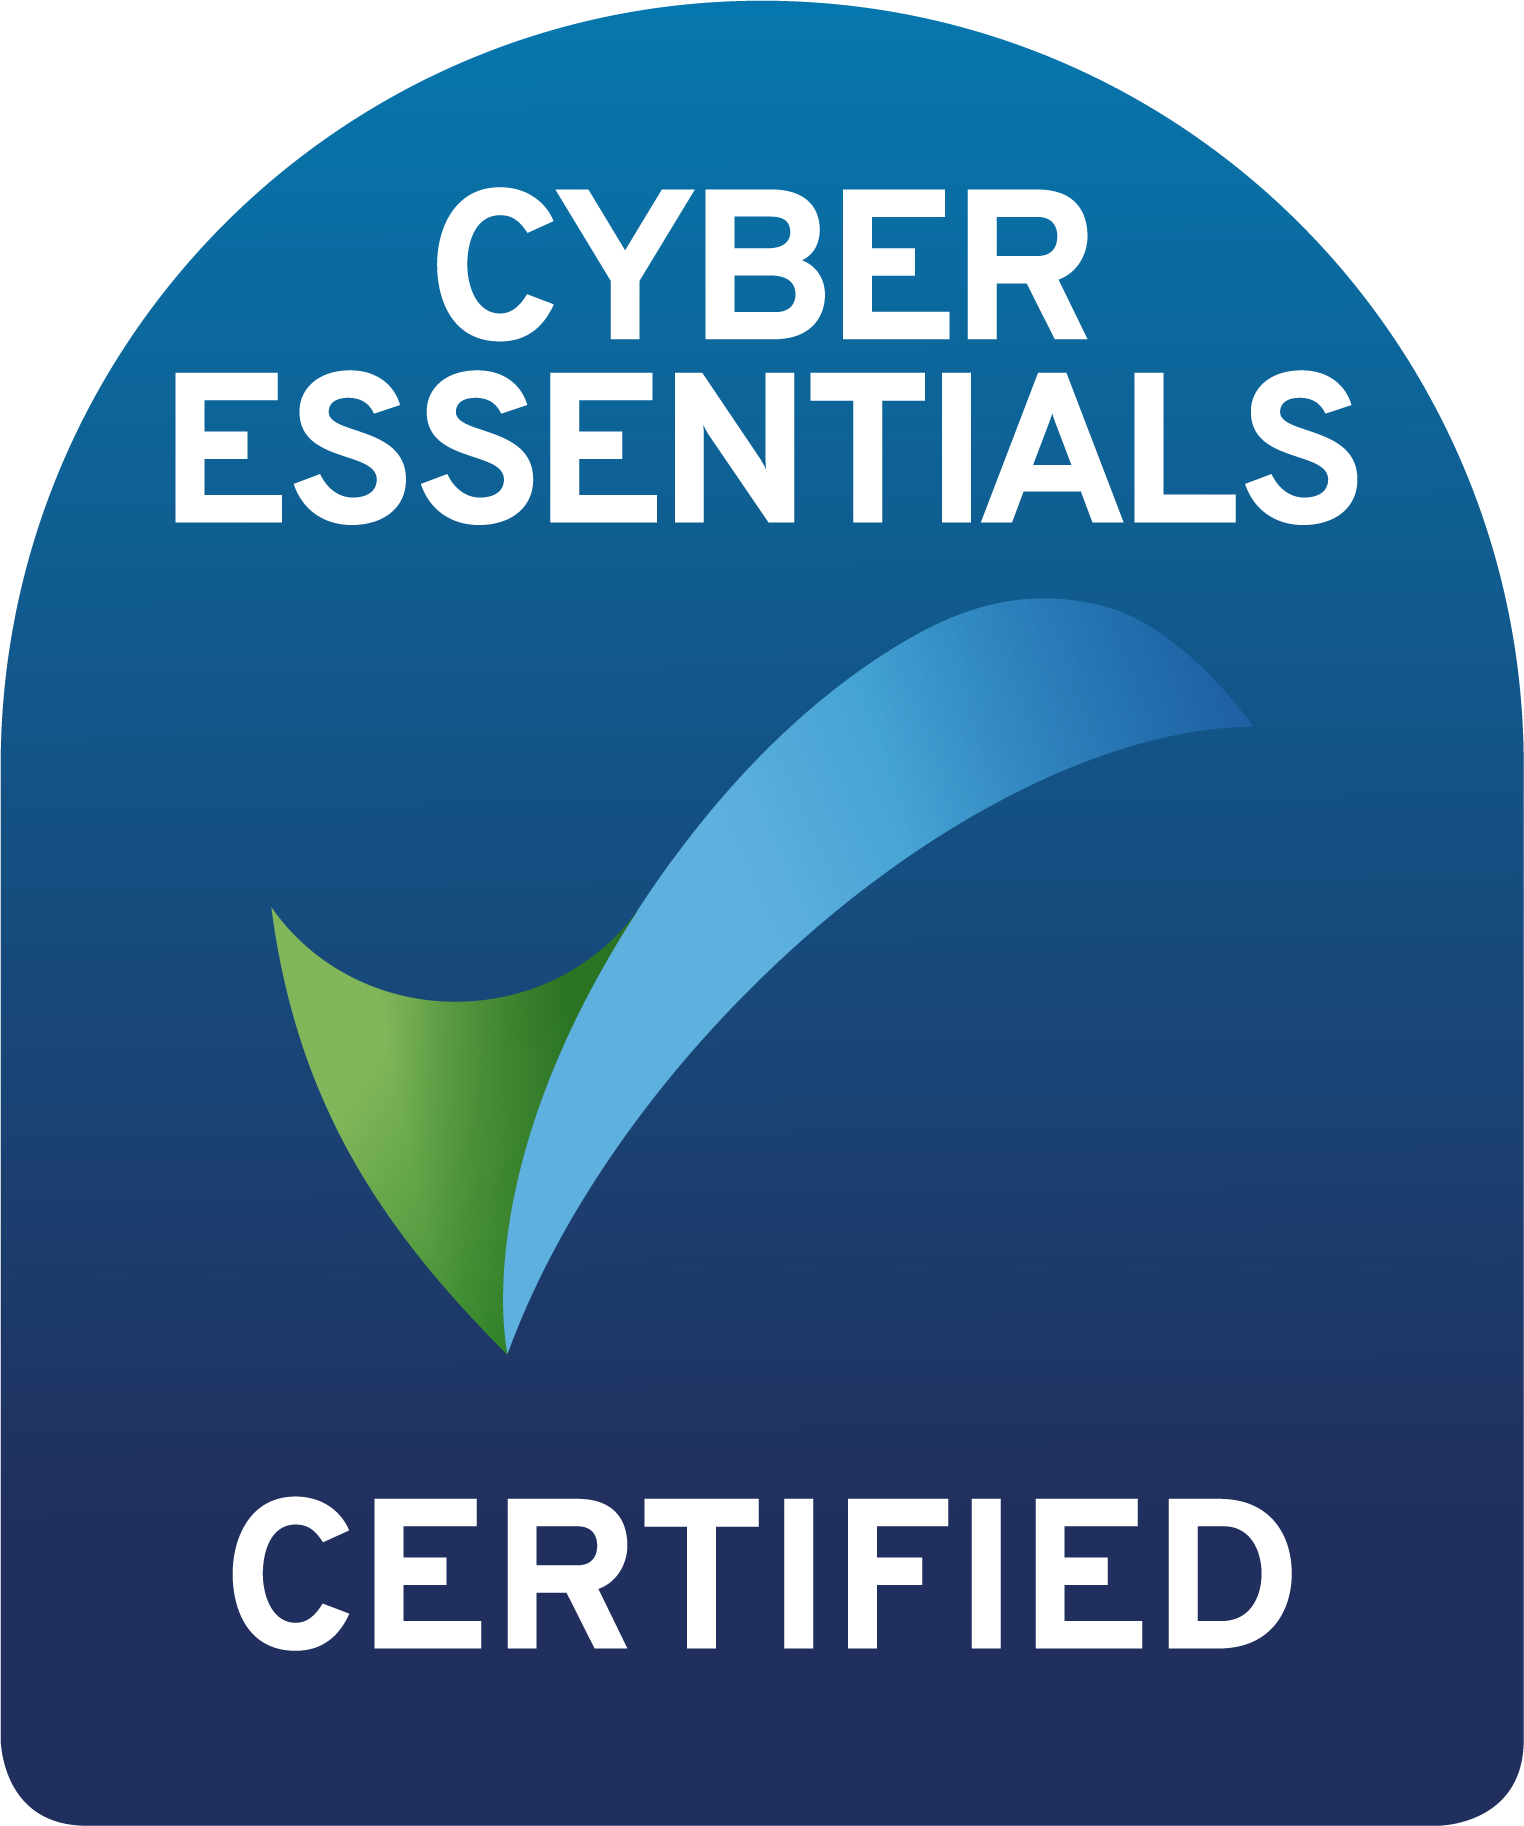 Cyberessentials Certification Mark